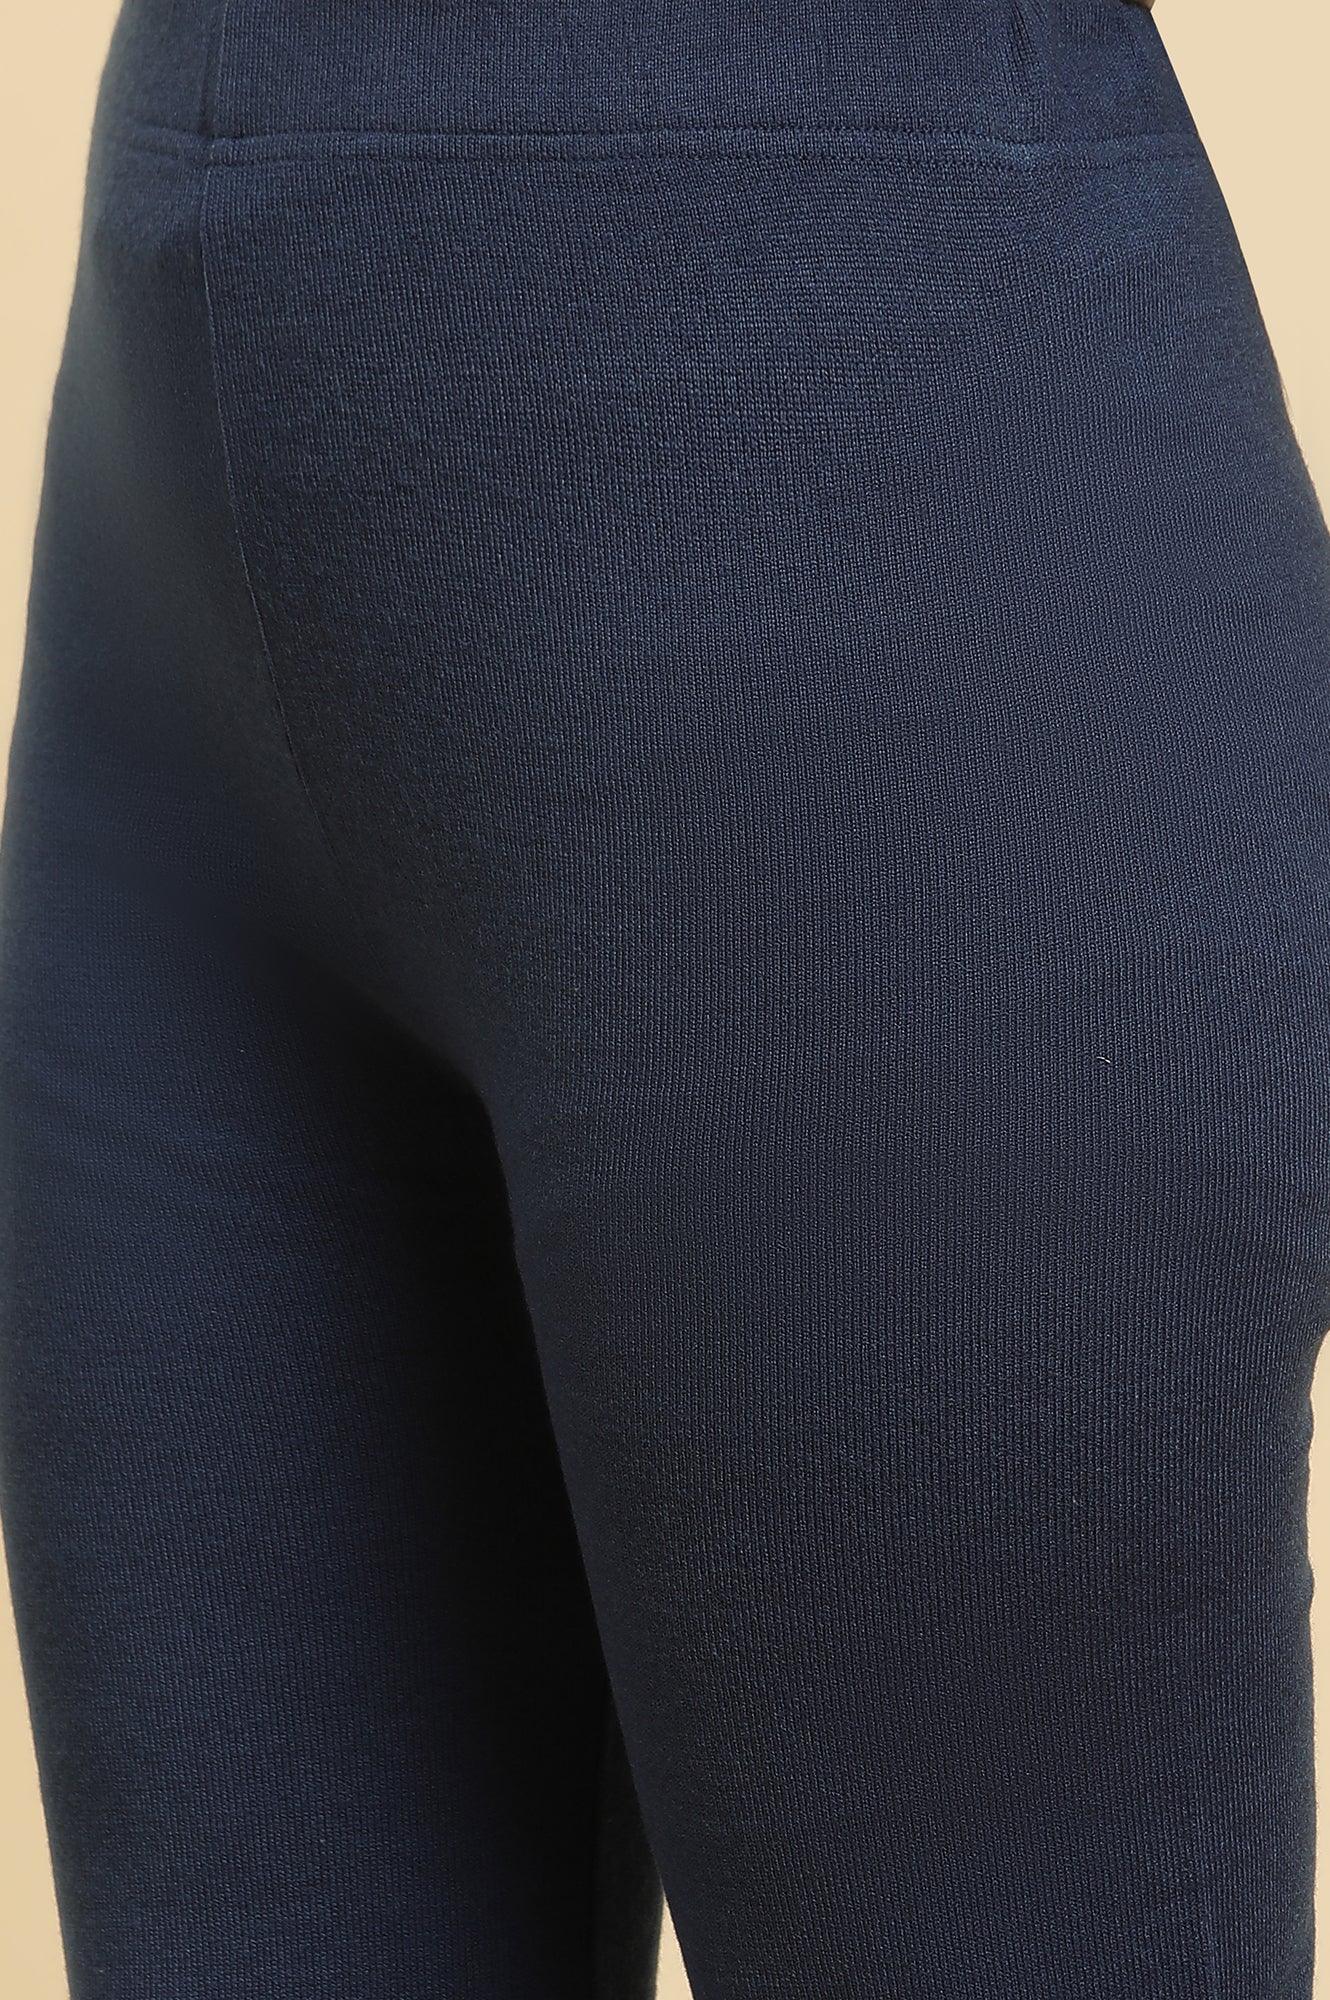 Royal Blue Printed Acrylic Kurta And Pants Set - wforwoman